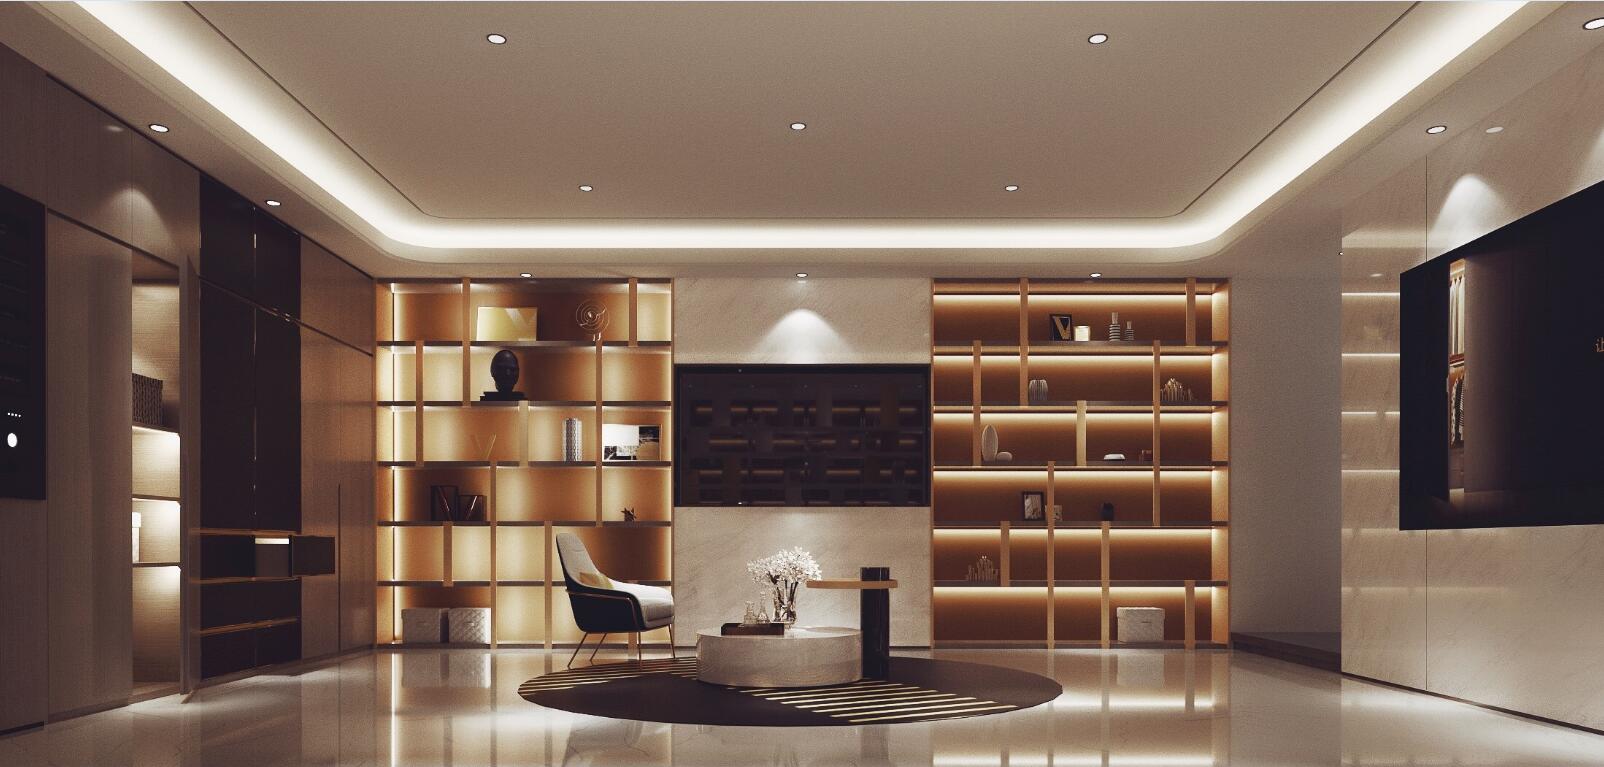 Study room cabinet lighting design recommendation